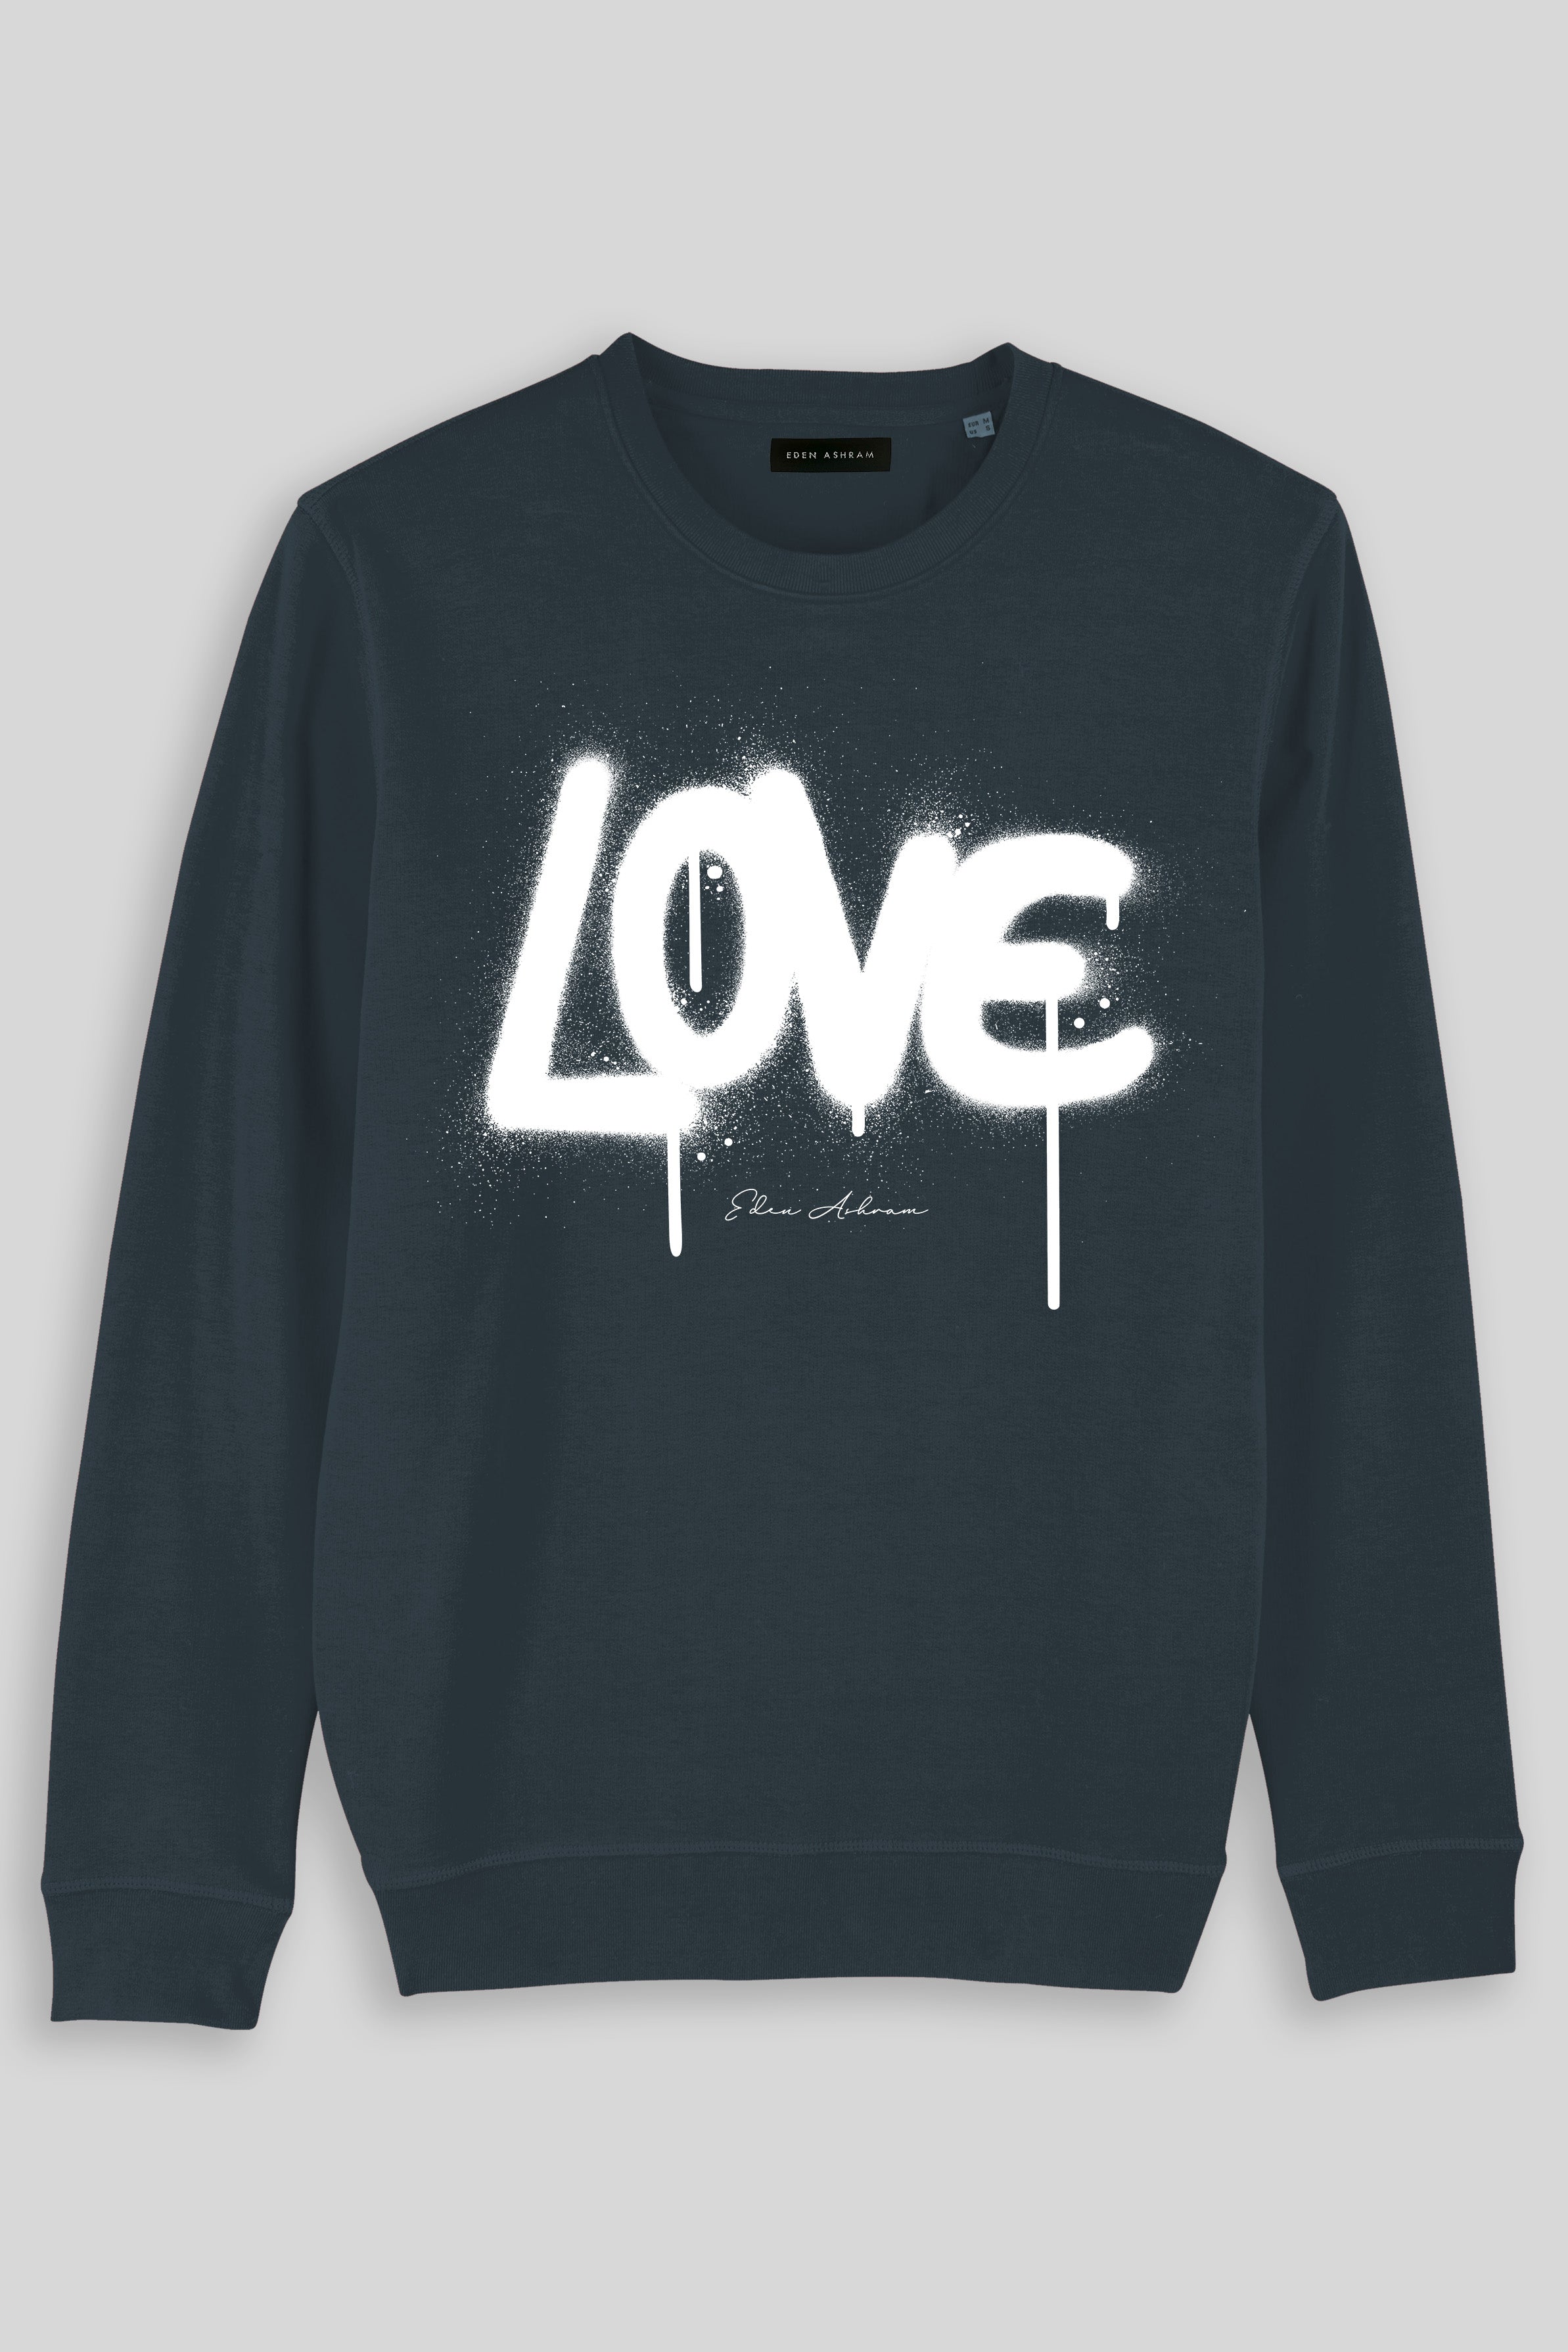 Eden Ashram Graffiti Love Premium Crew Neck Sweatshirt India Ink Grey